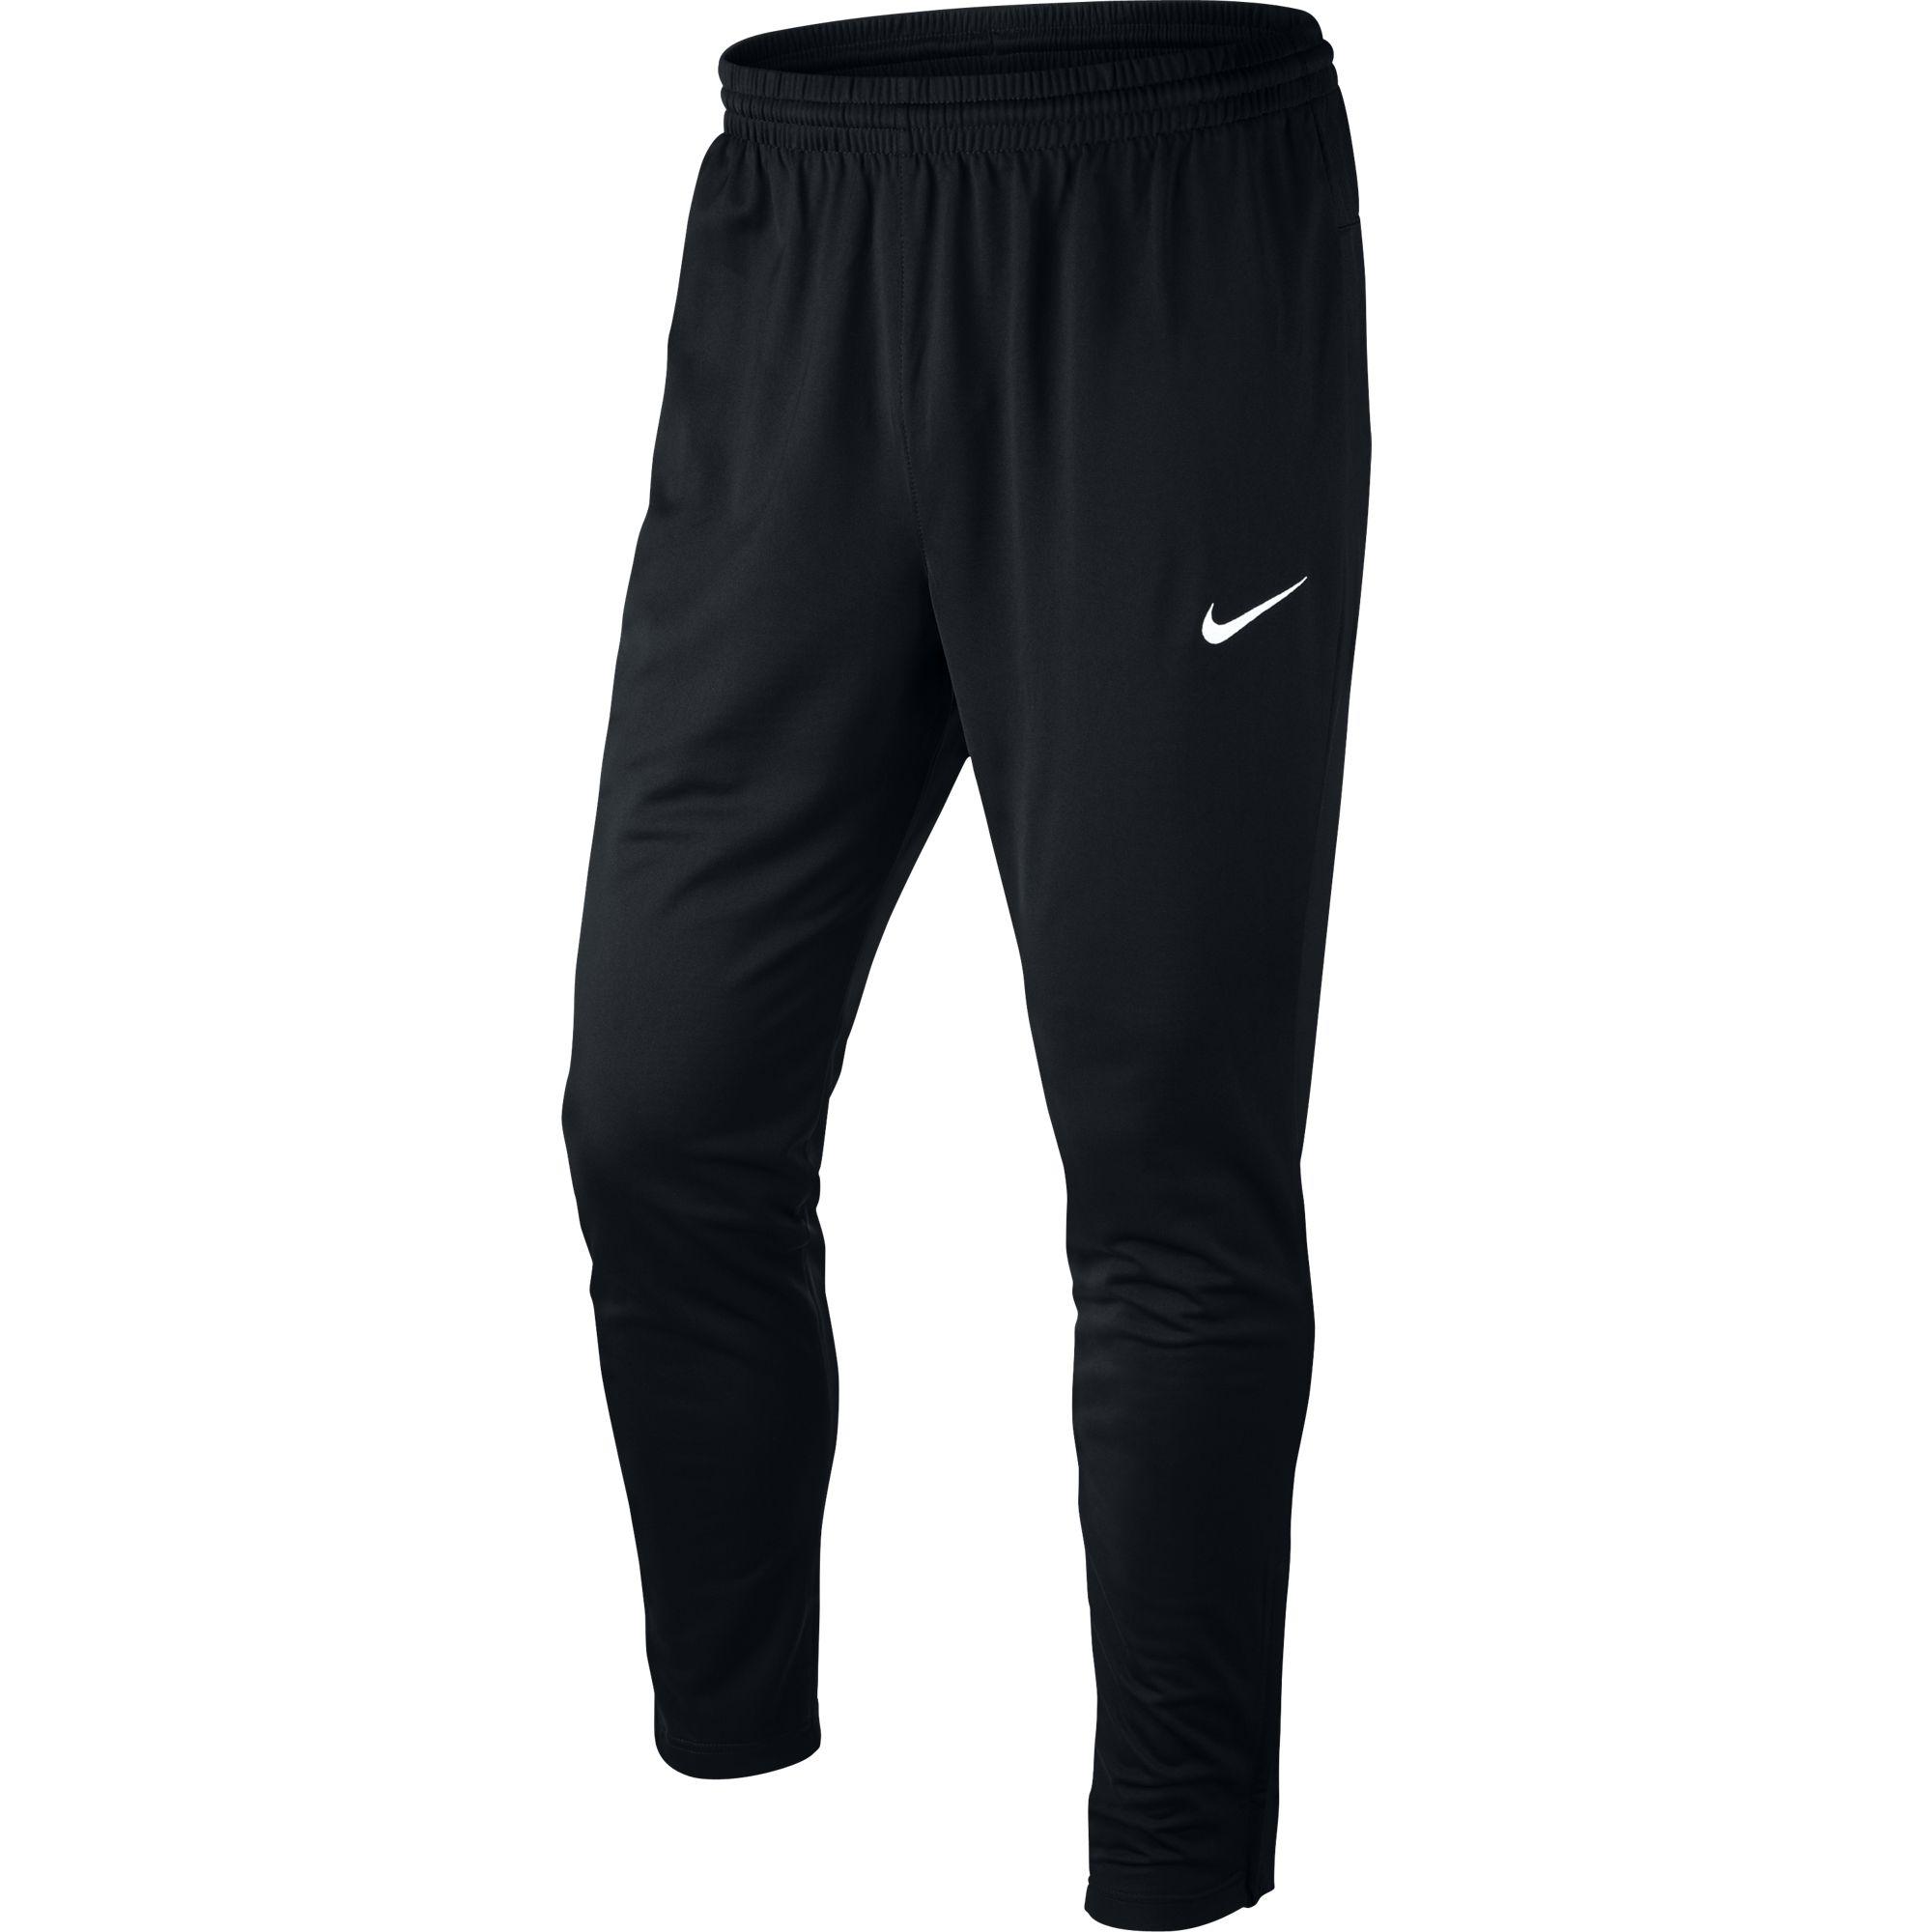 Nike Mens Technical Knit Training Pants - Black - Tennisnuts.com